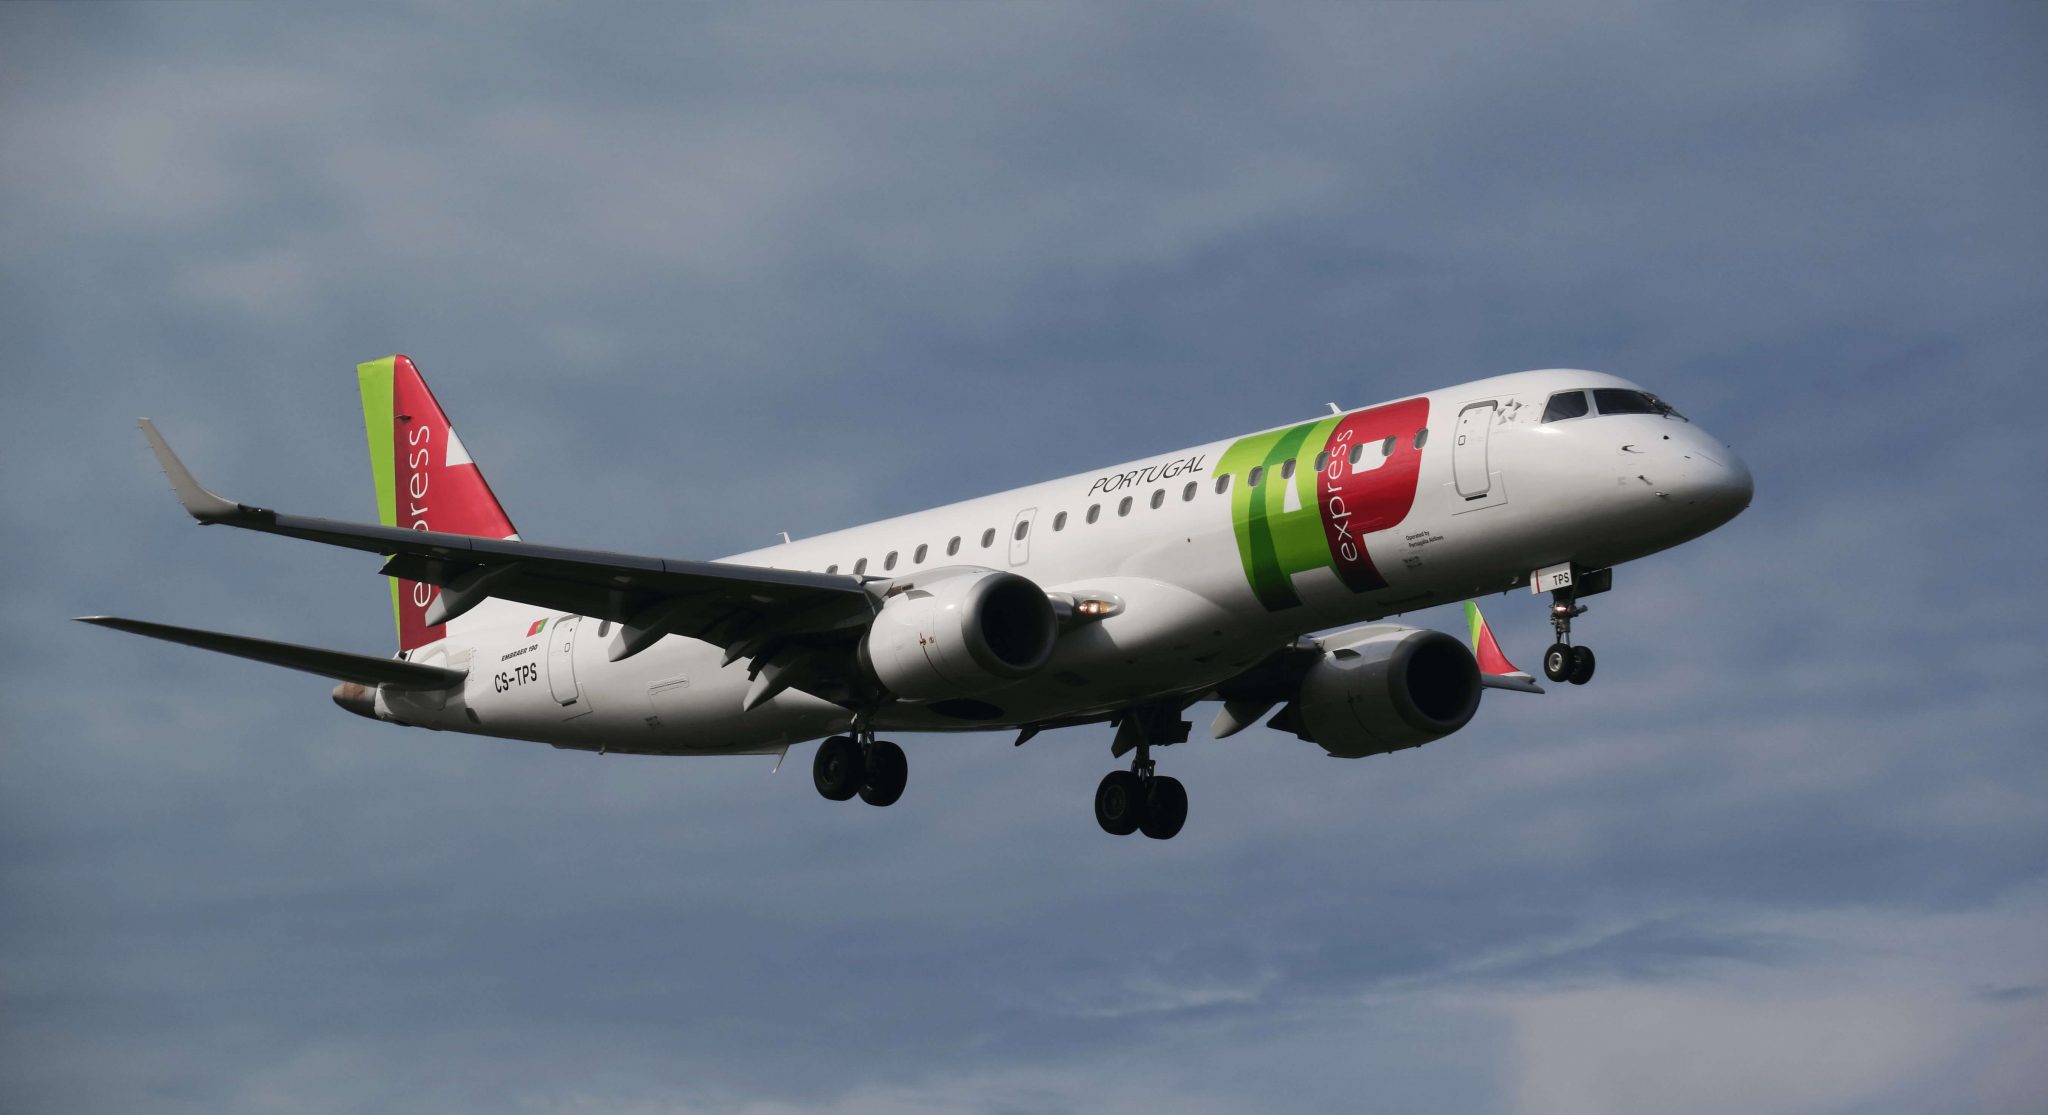 TAP Air Portugal chooses AVIATAR for digital fleet support